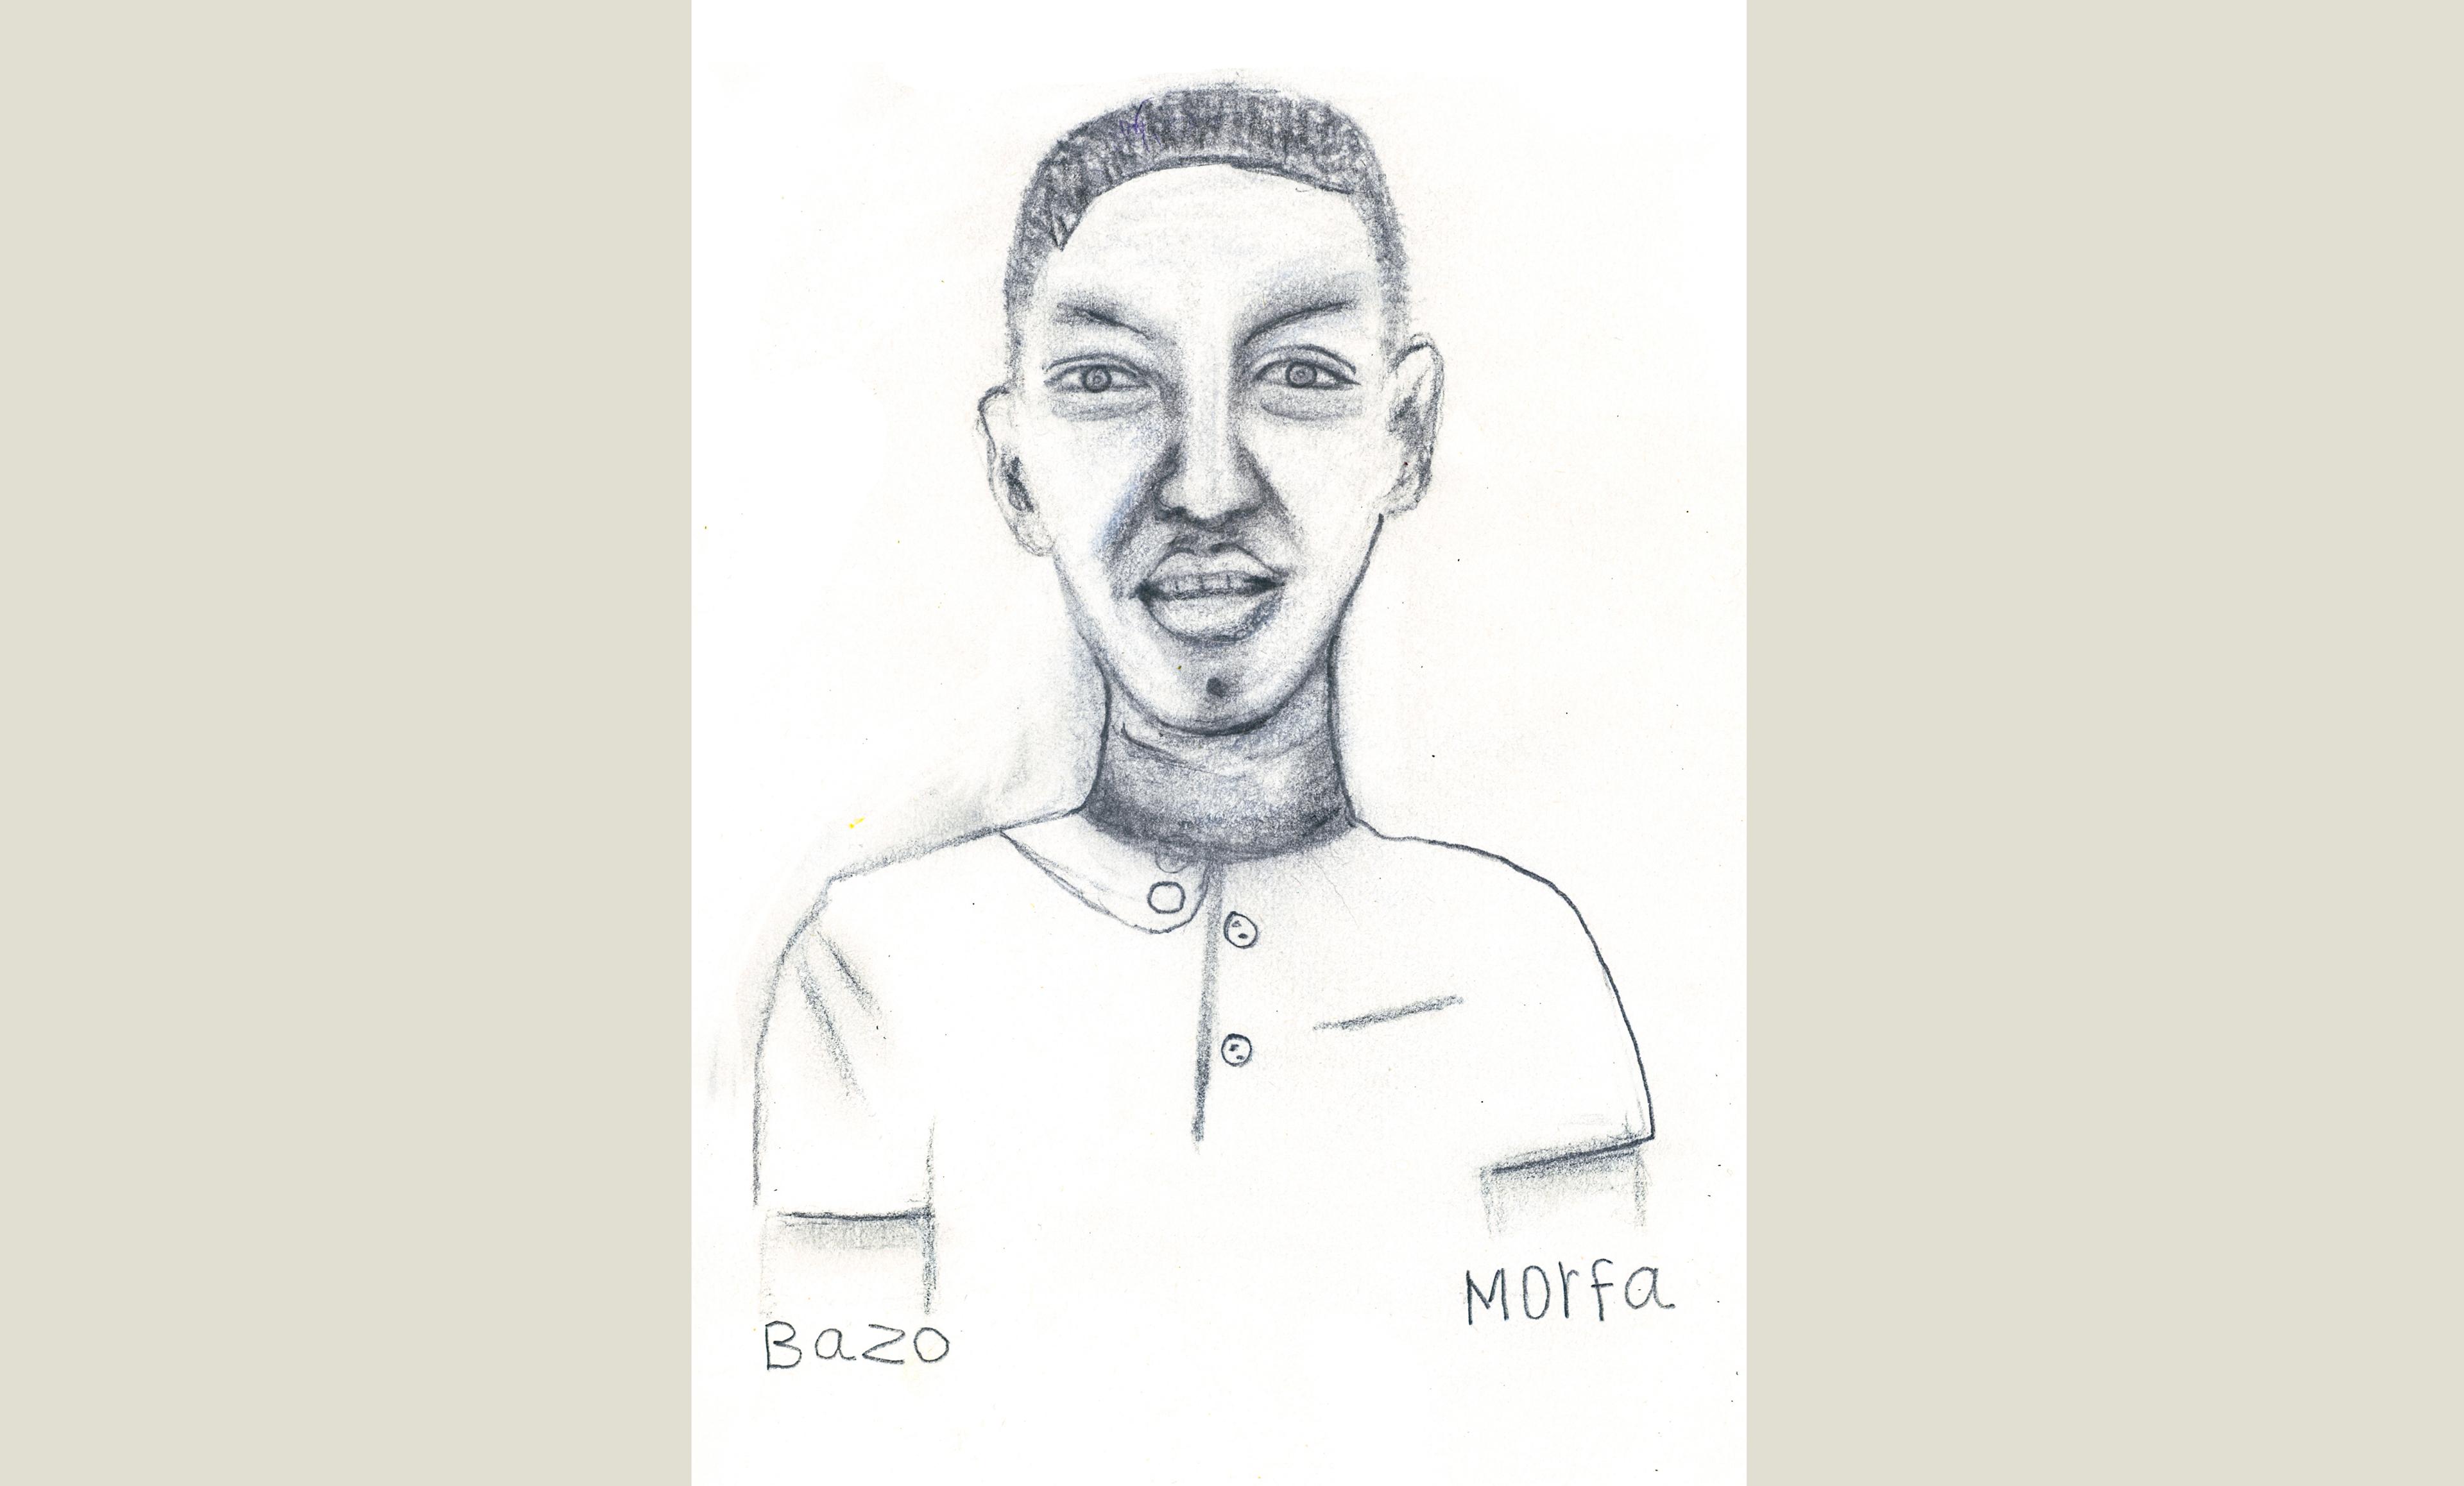 pencil sketch drawing/ portrait of a man